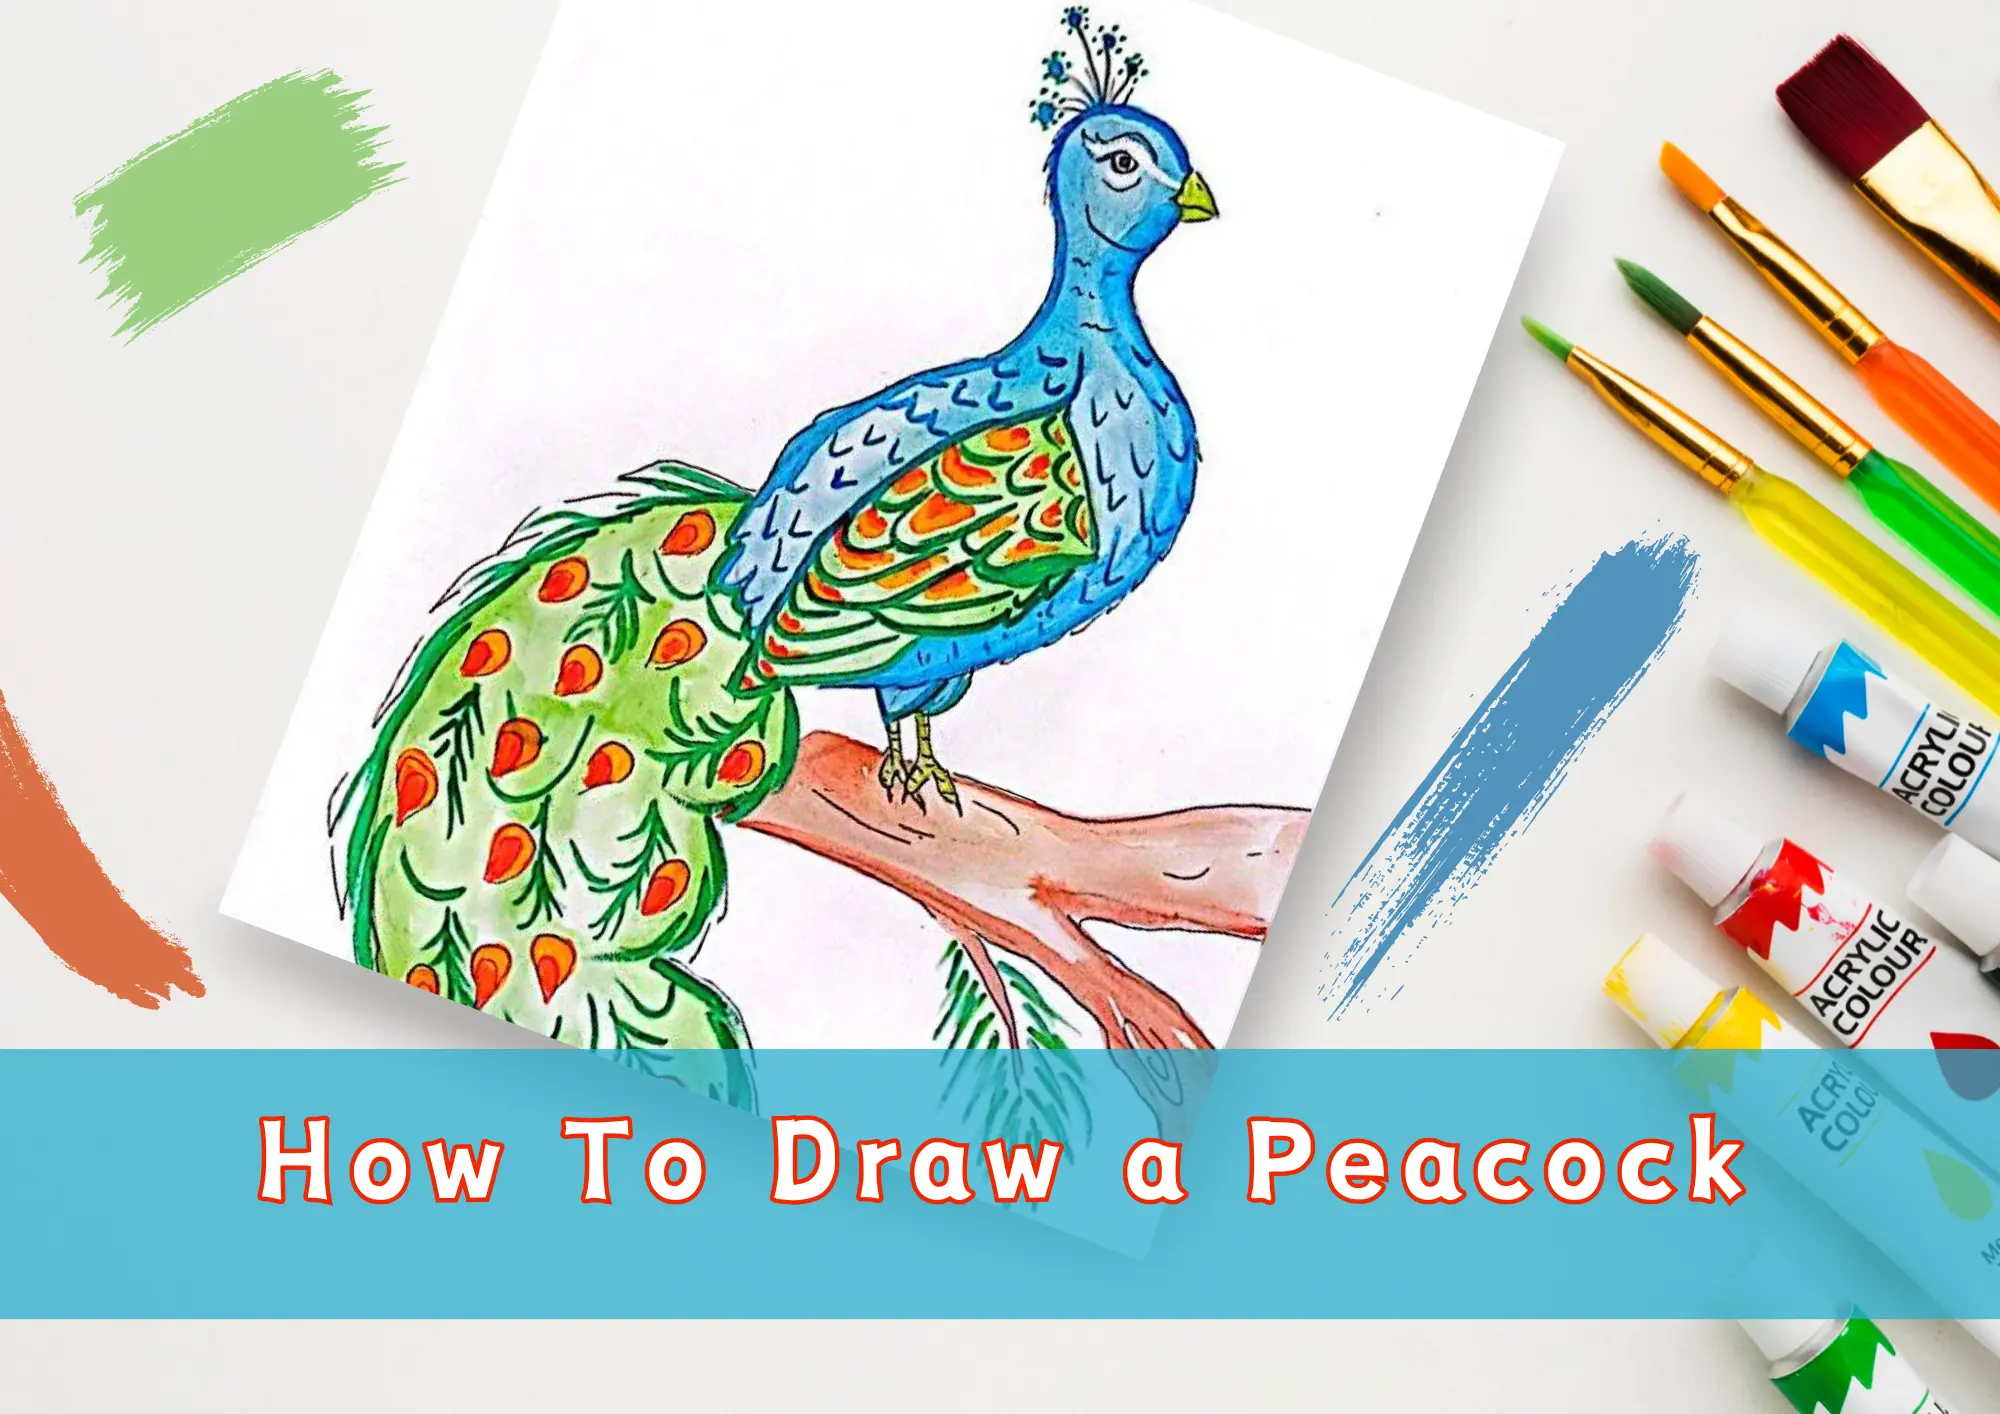 Peacock Drawing In Pencil - GranNino